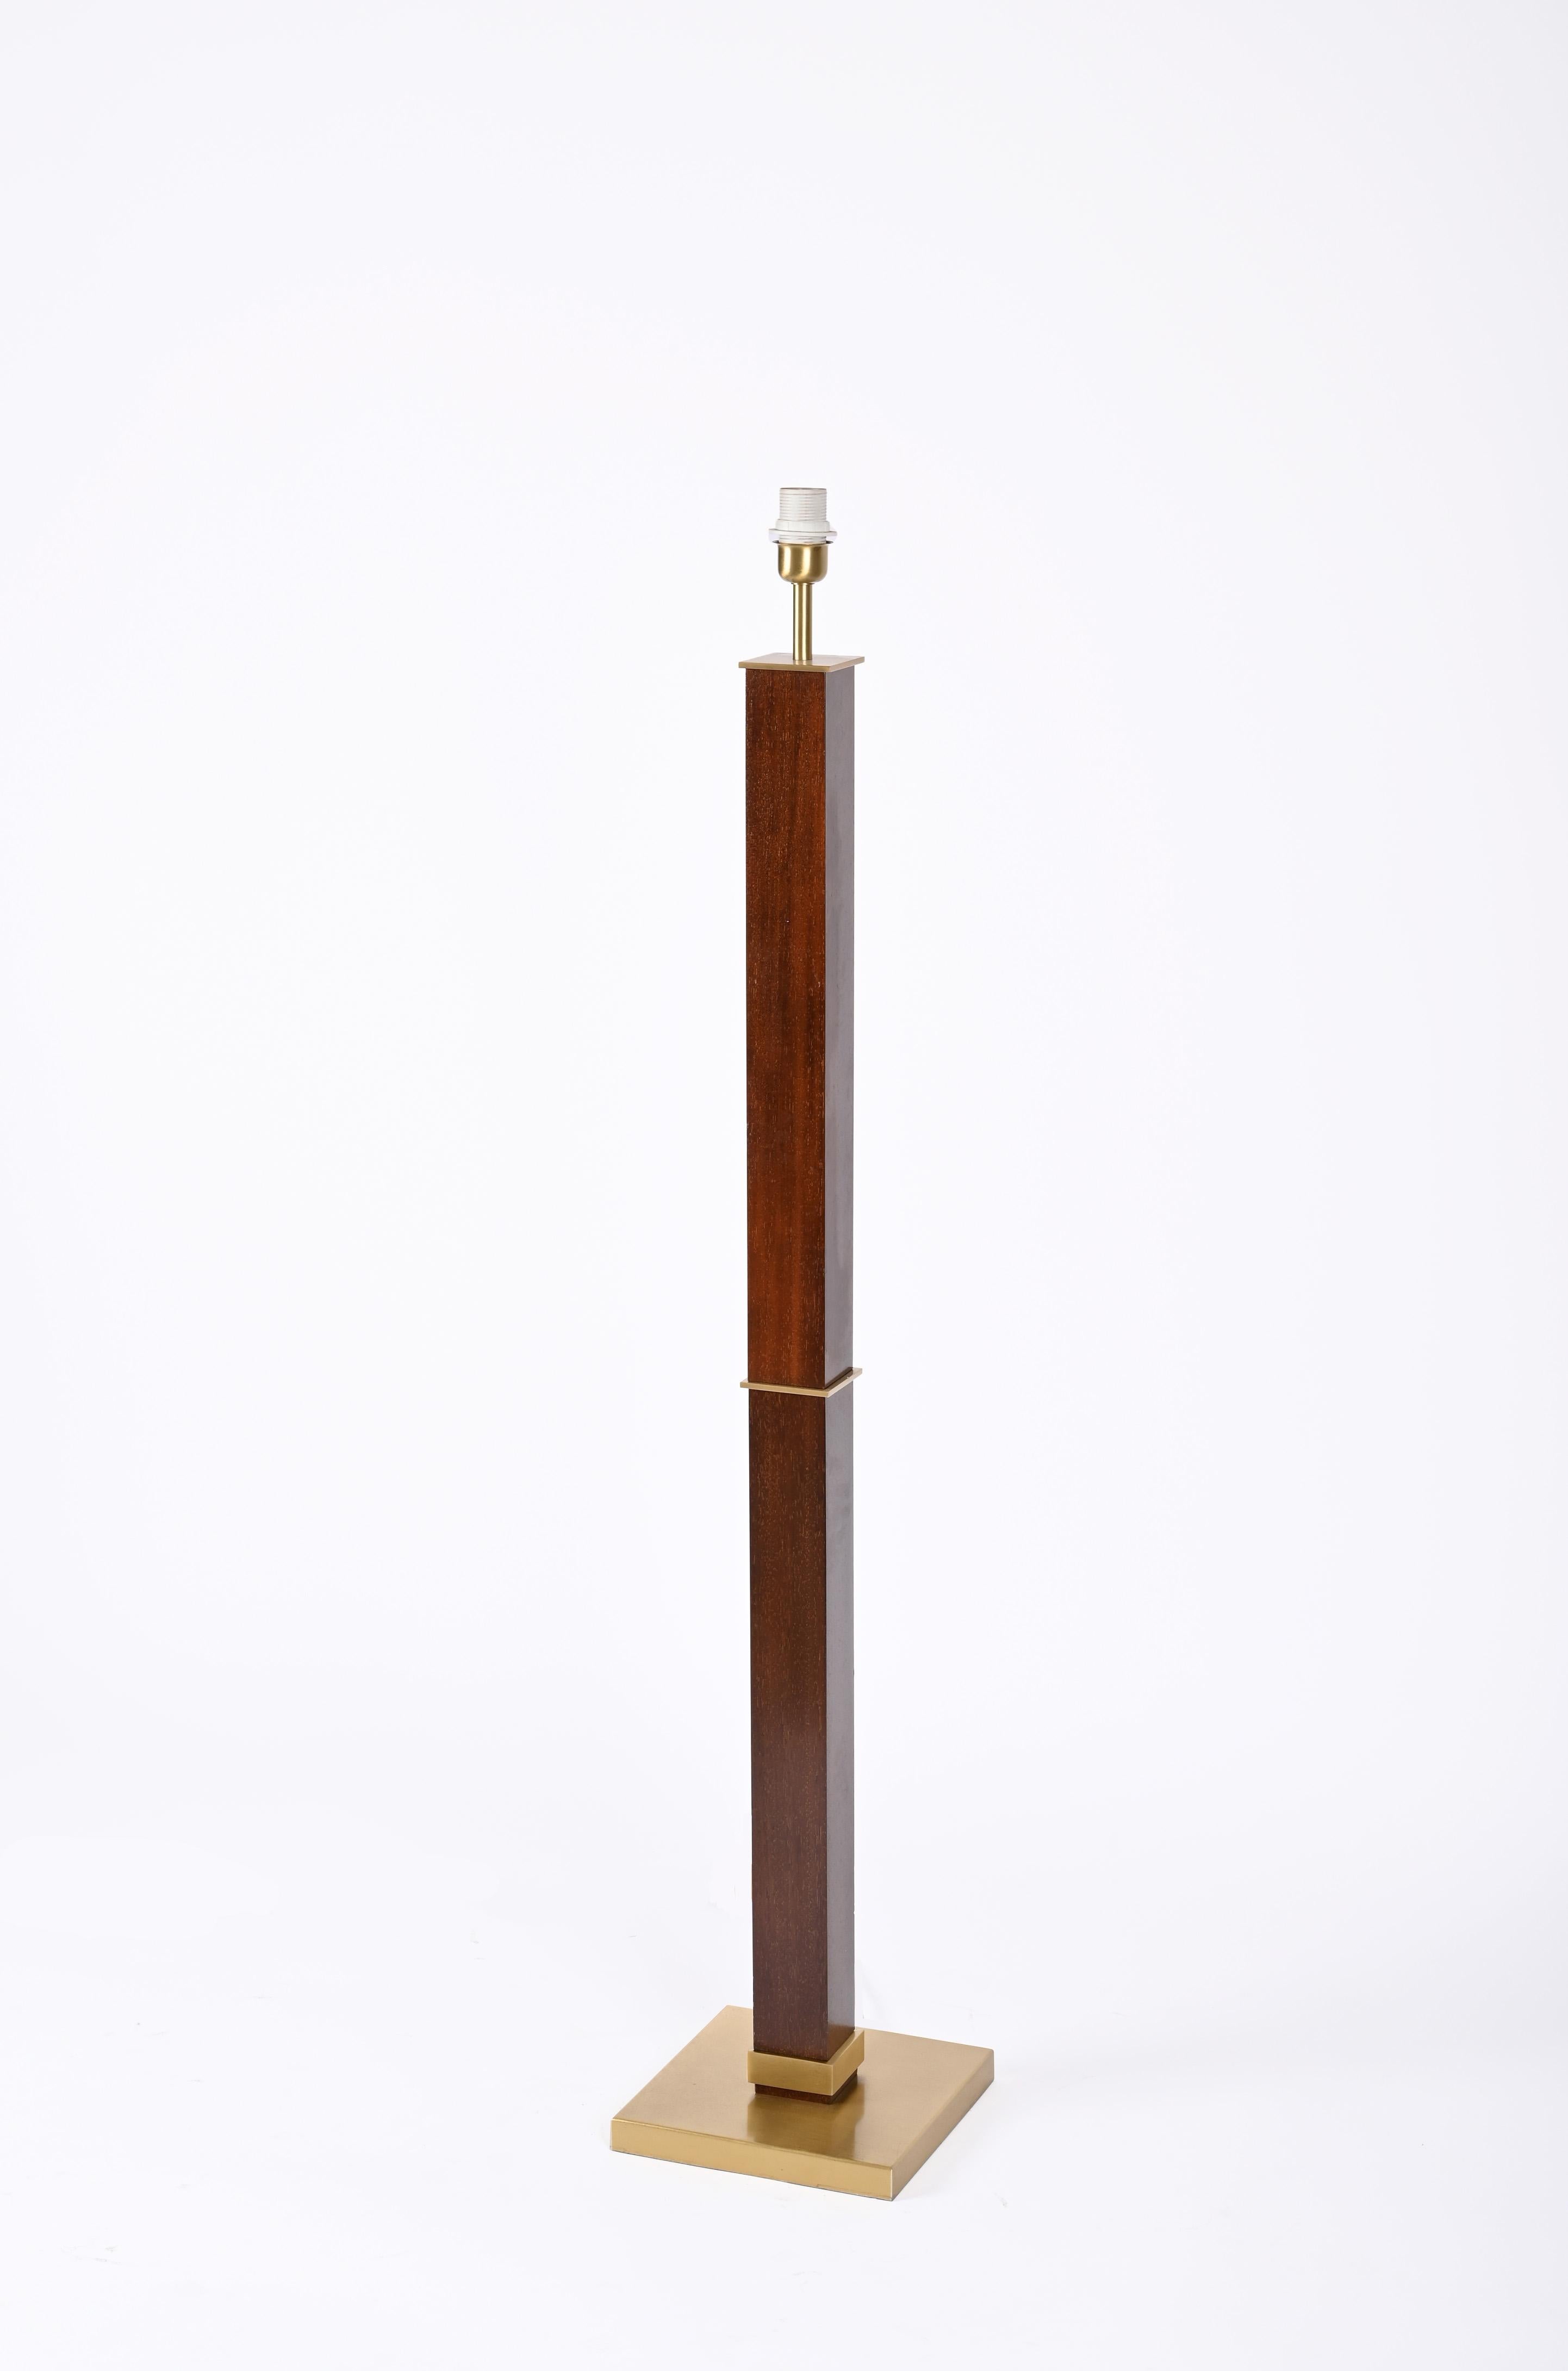 Zonca Voghera Minimal Mid-Century Italian Wood and Steel Floor Lamp, 1980s For Sale 4